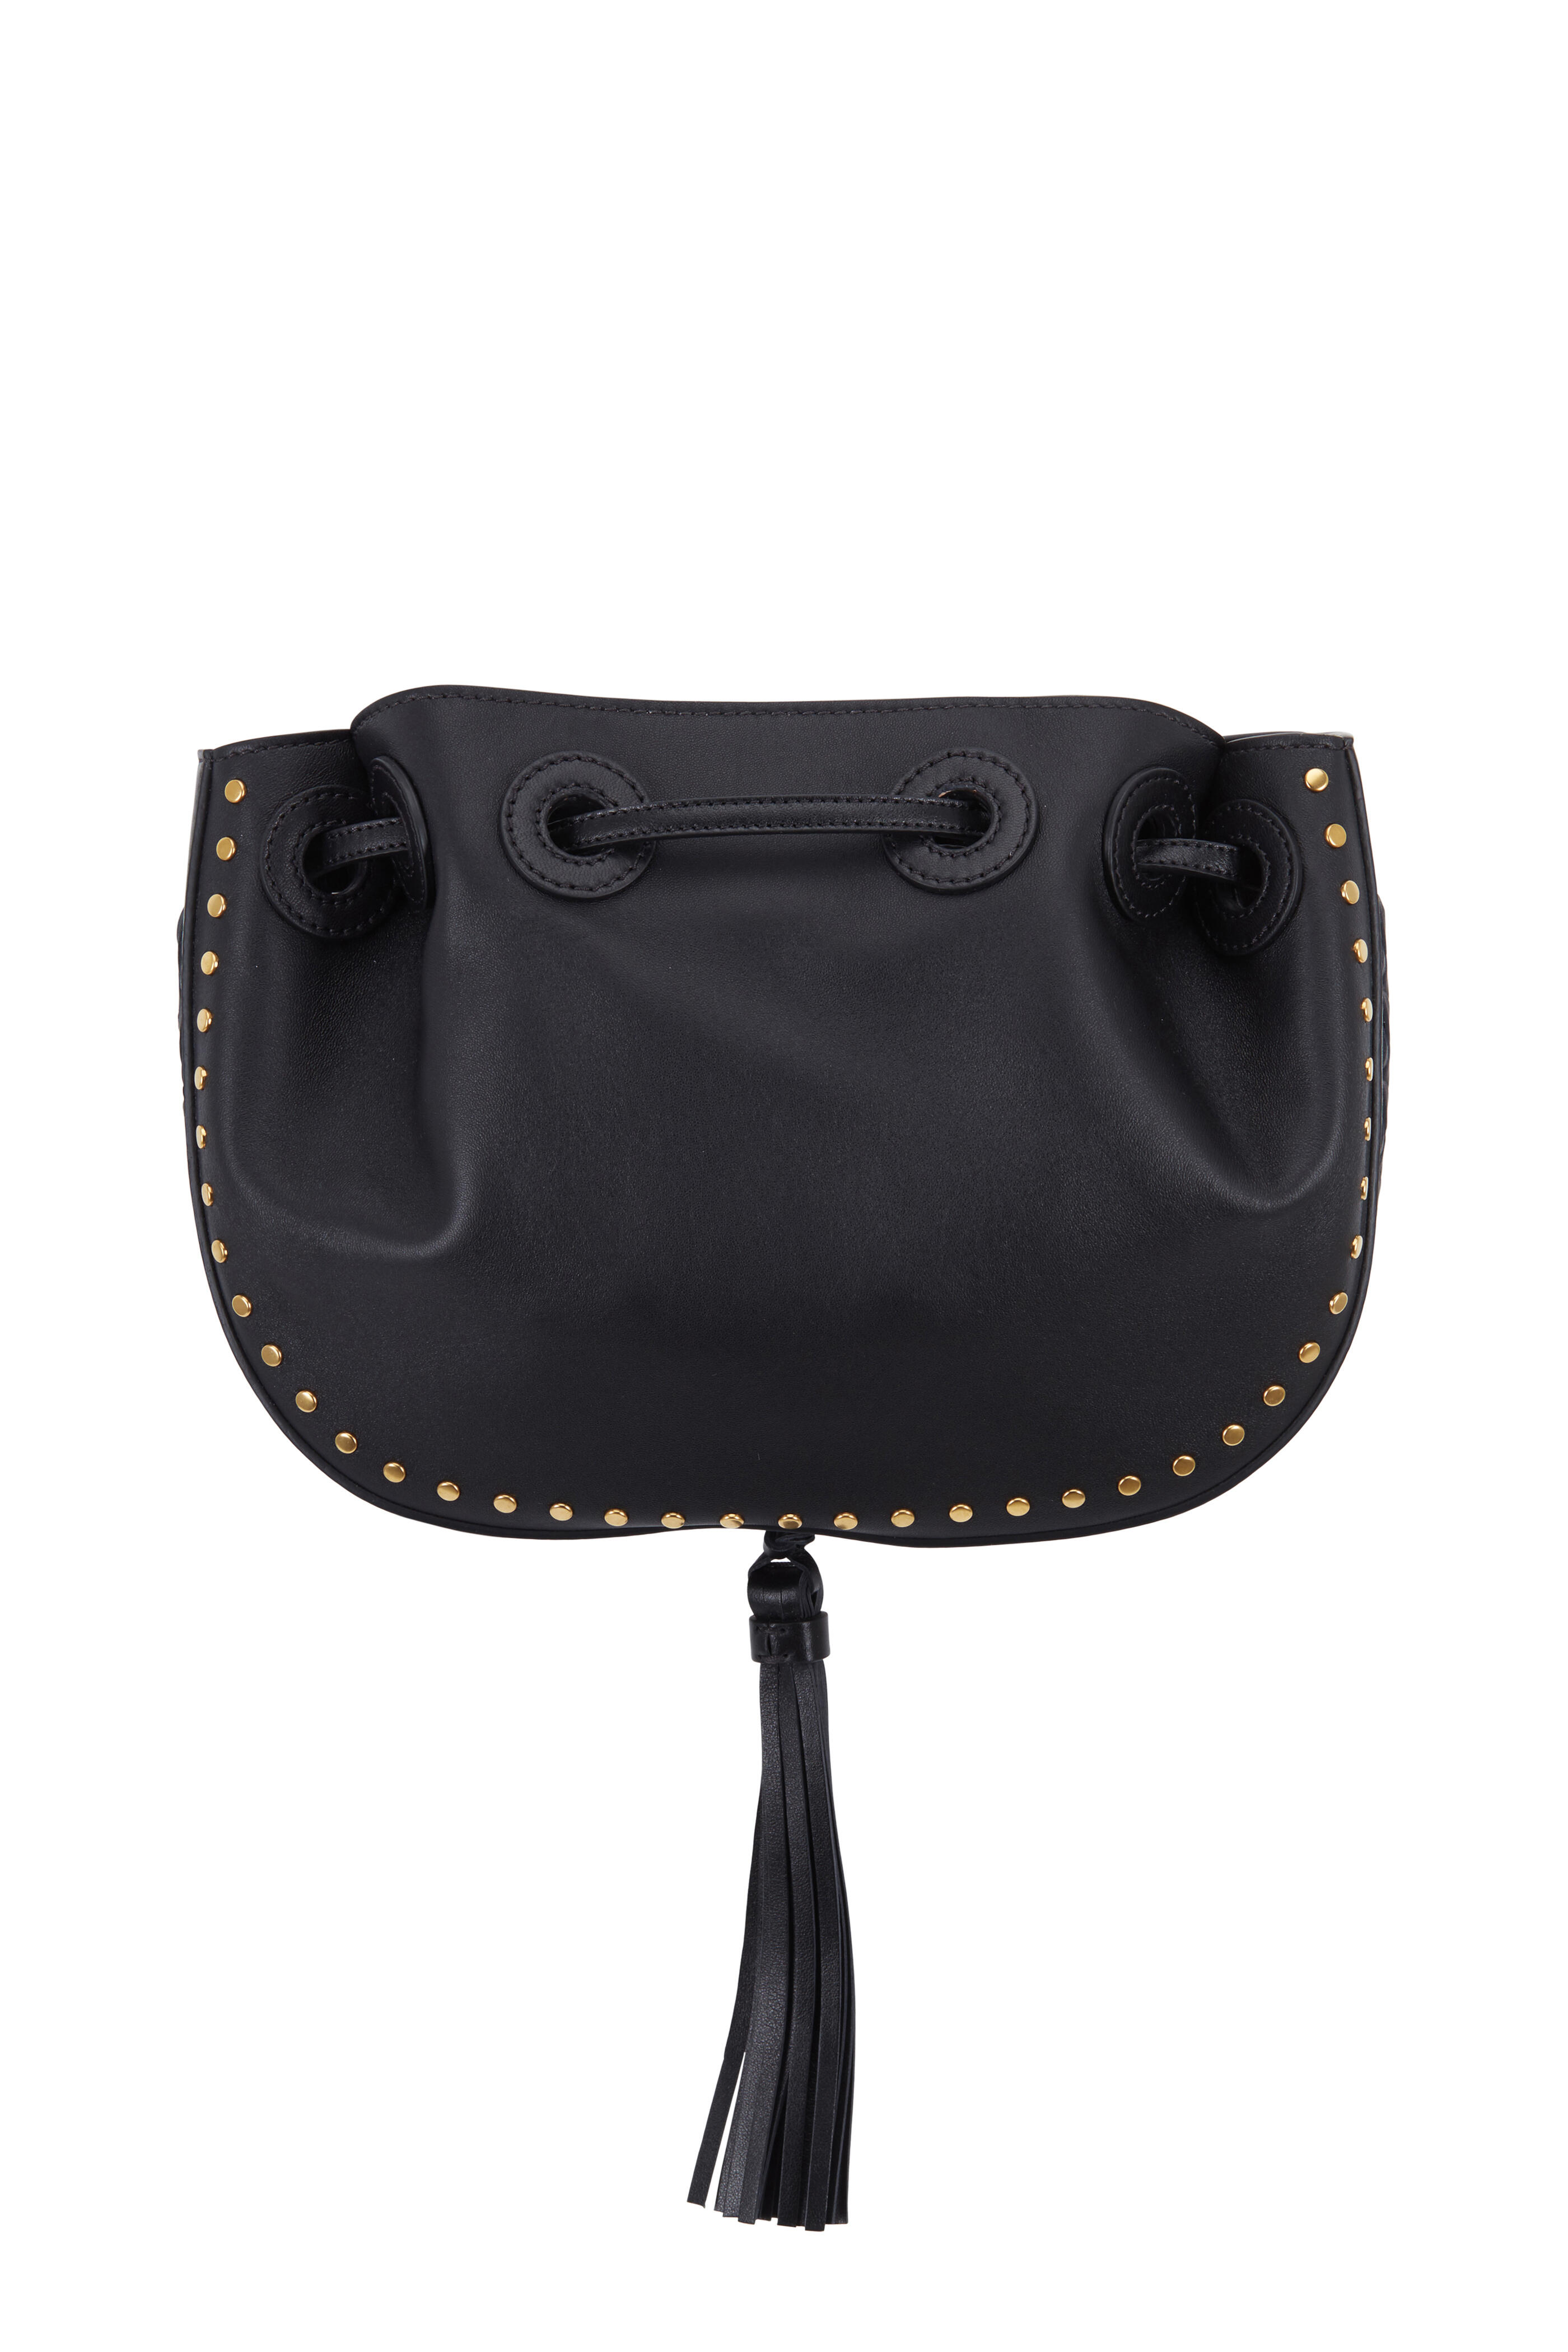 Bombon M' Black Handbag with Braided Handles in Shiny Leather Woman